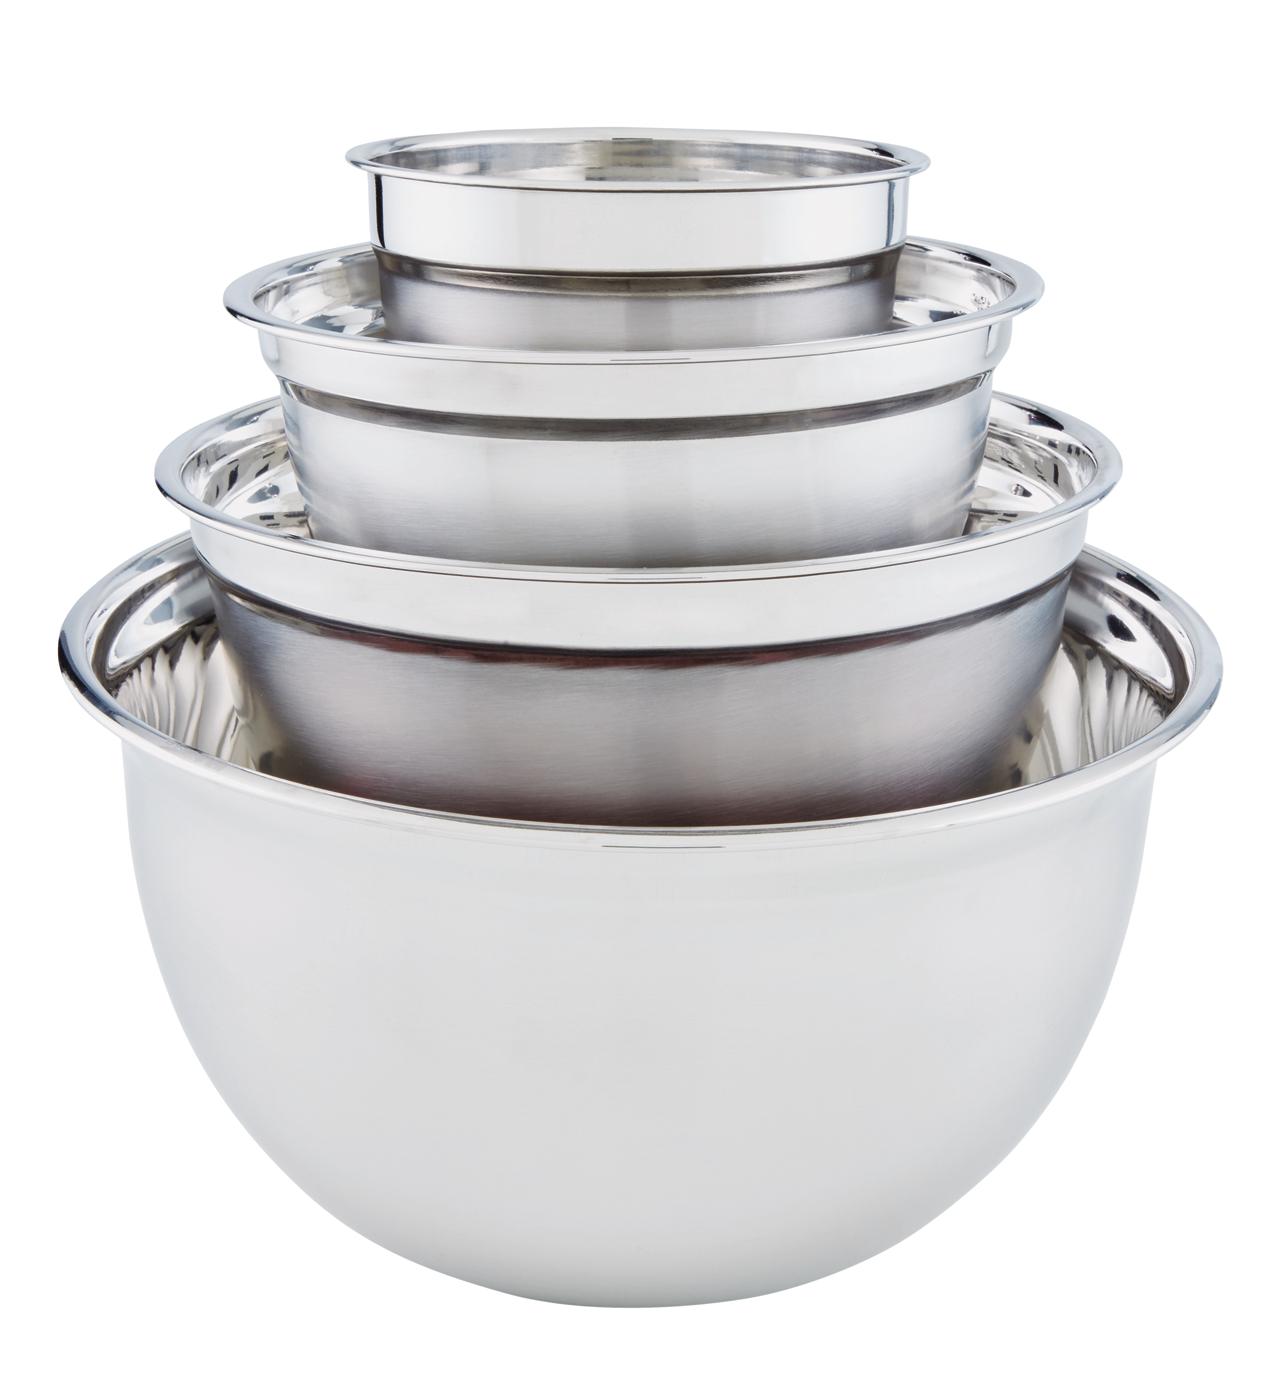 Inox Kitchenware Stainless Steel Mixing Bowl Set; image 2 of 2